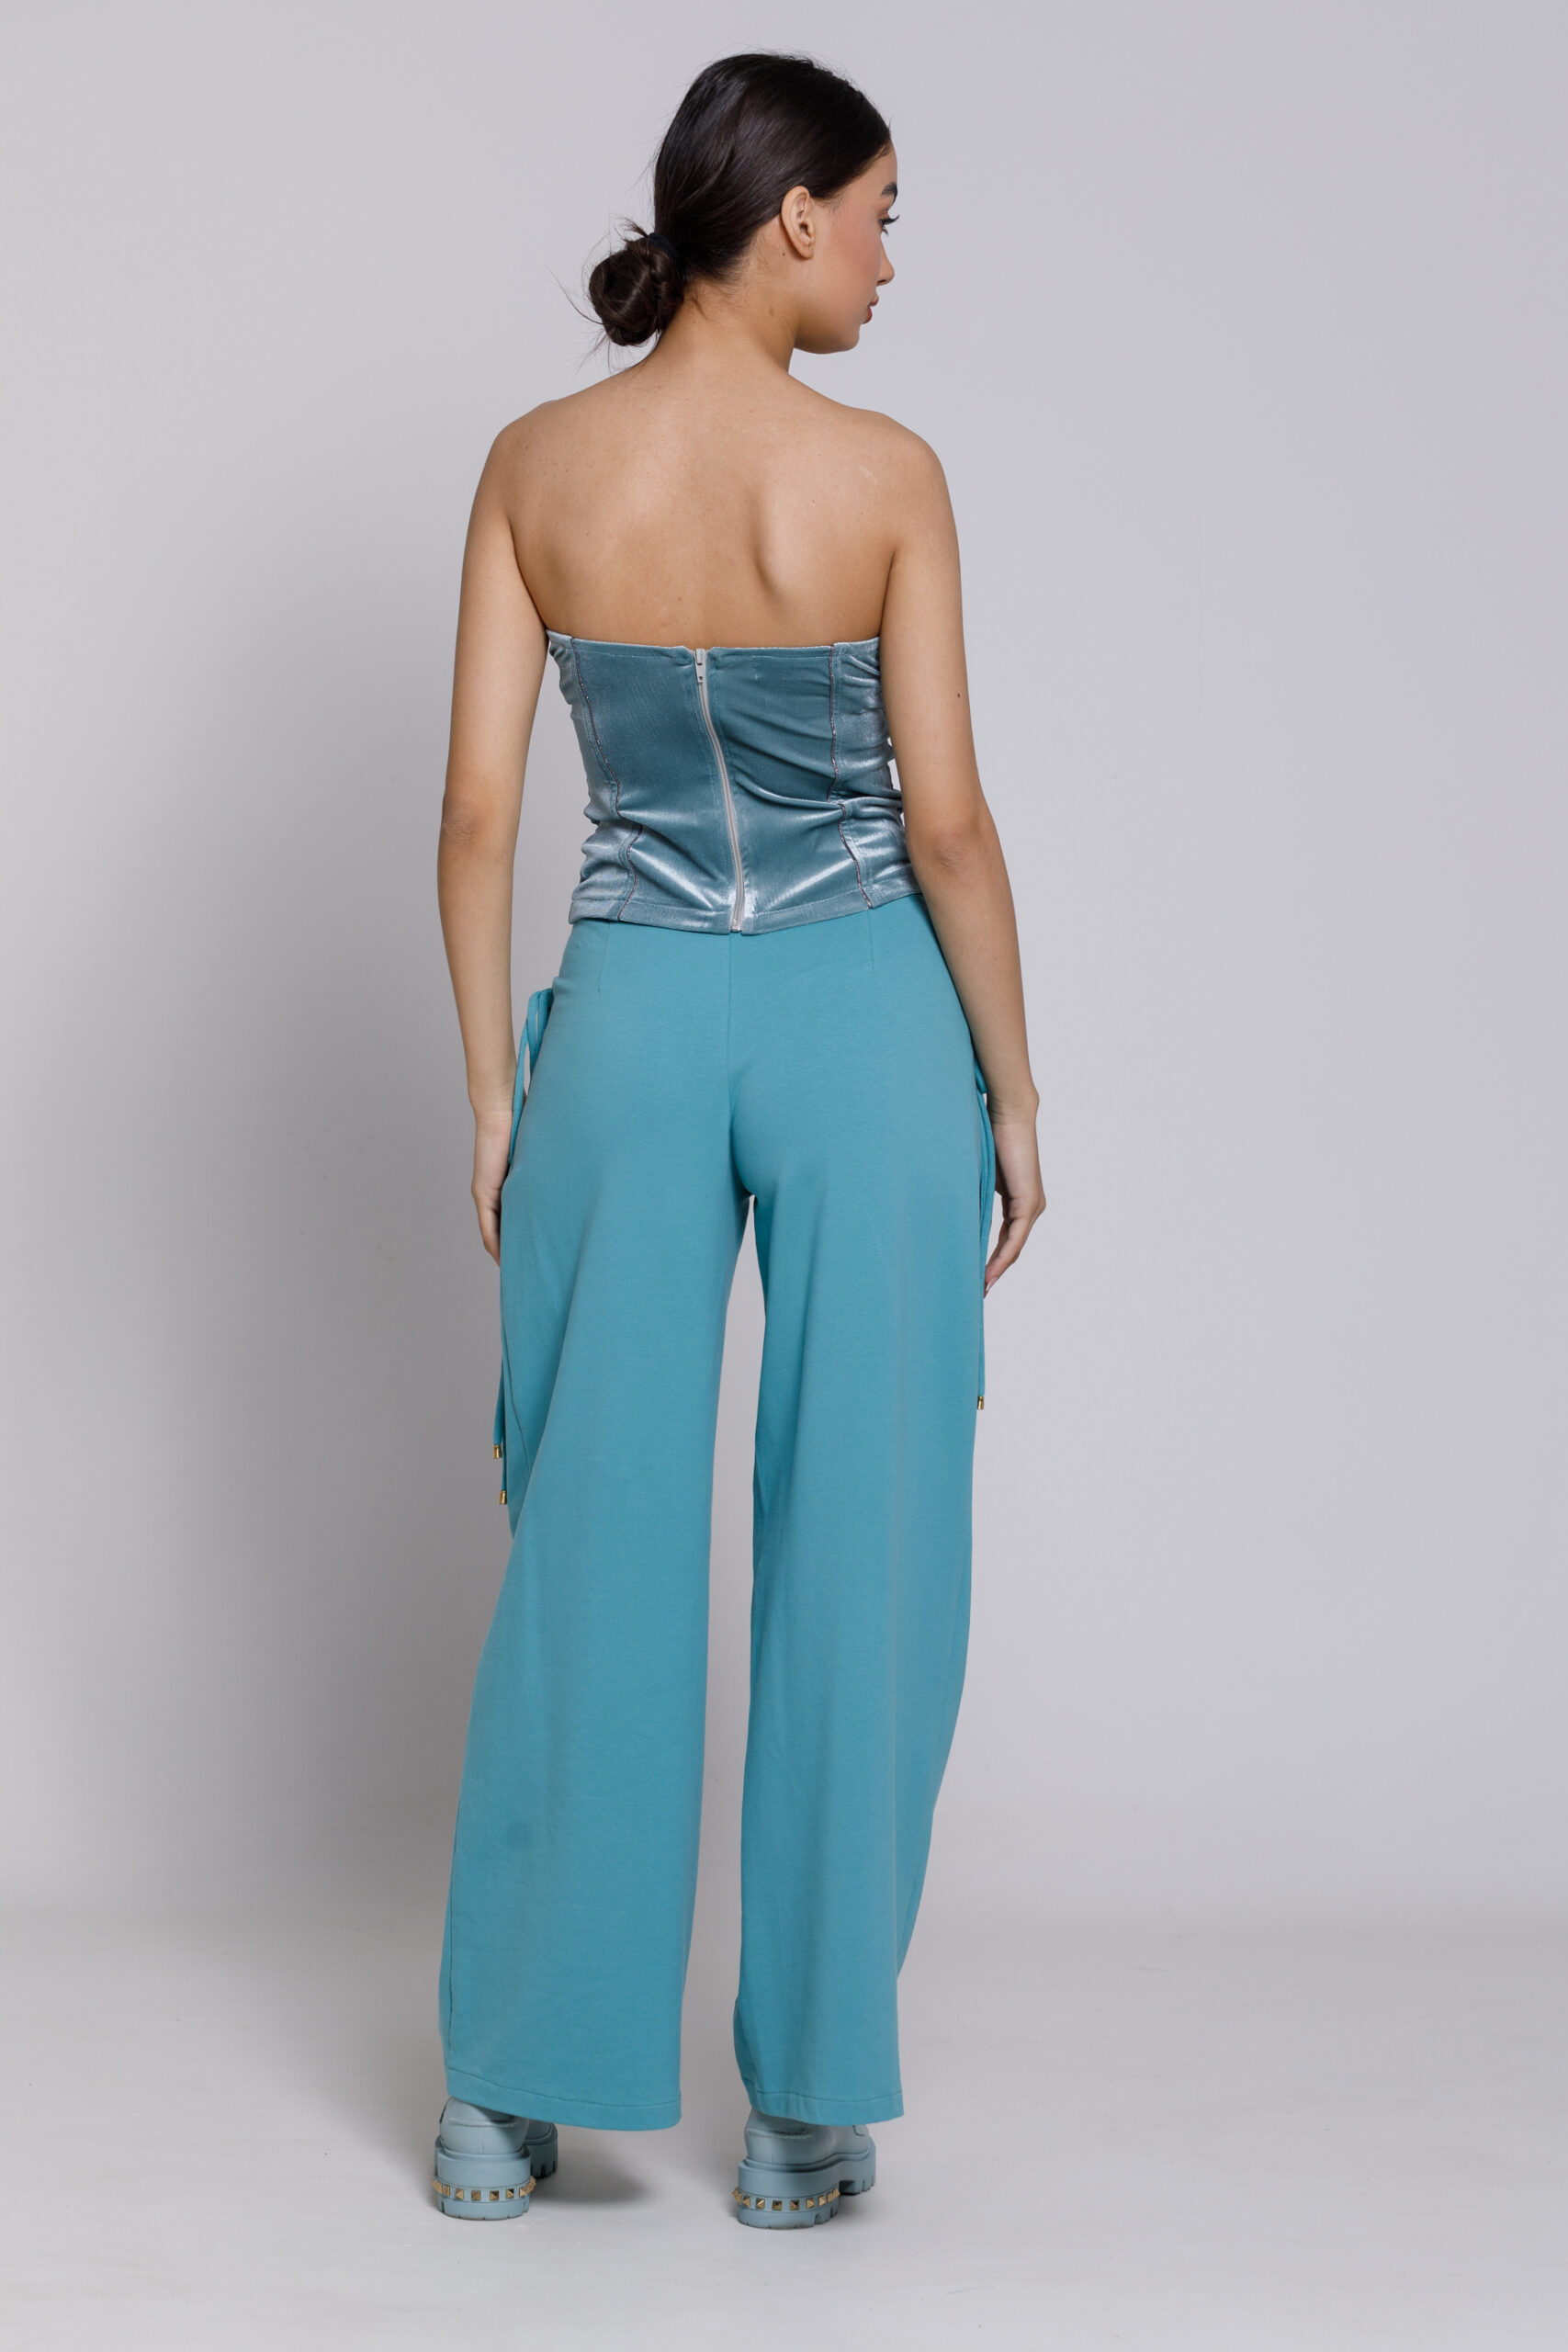 BONNIE turquoise pants. Natural fabrics, original design, handmade embroidery